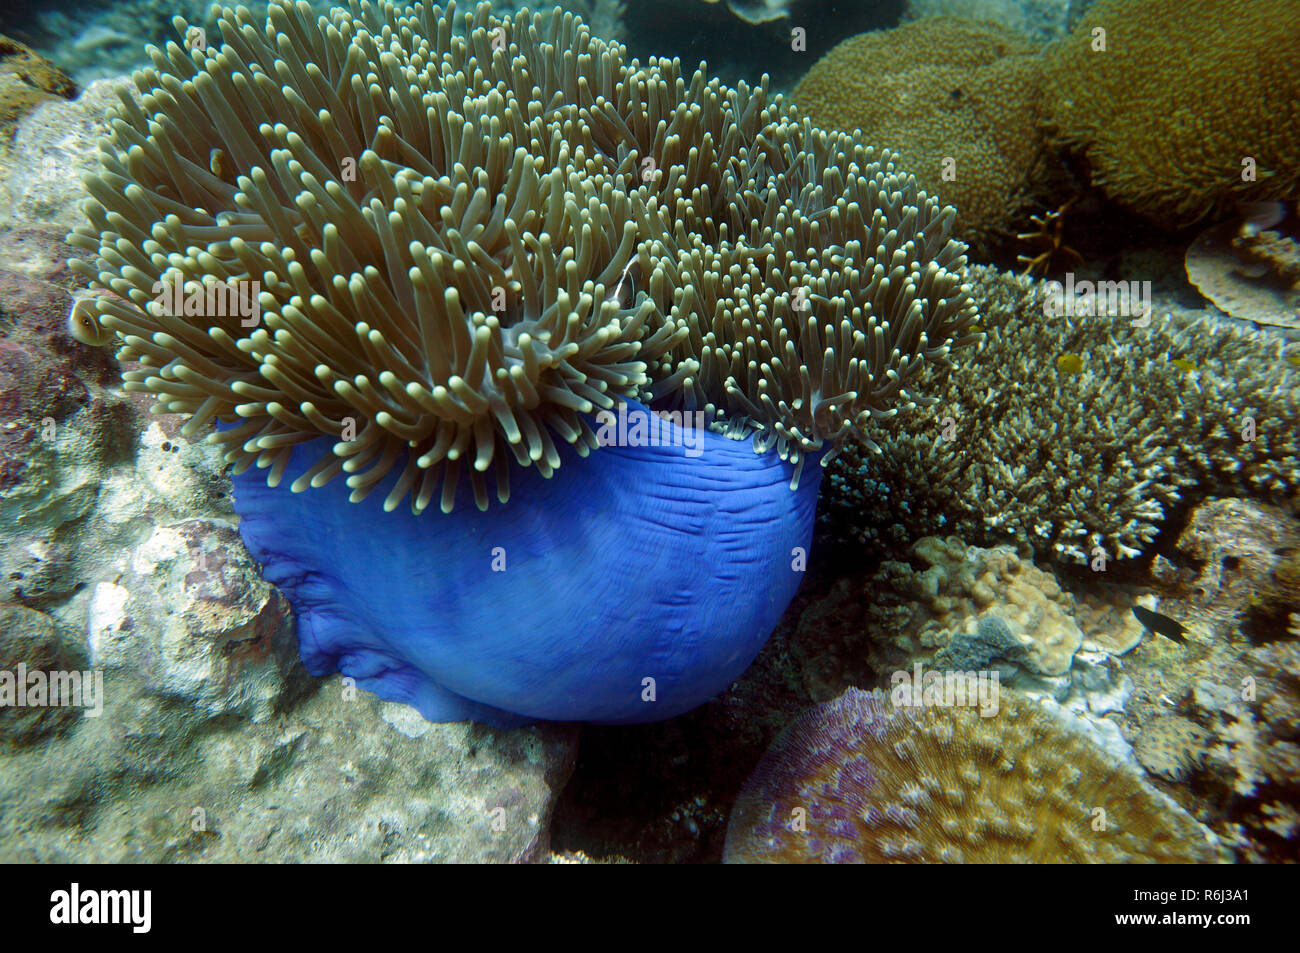 Prachtanemone,Maurizio anemone heteractis magnifica Foto Stock